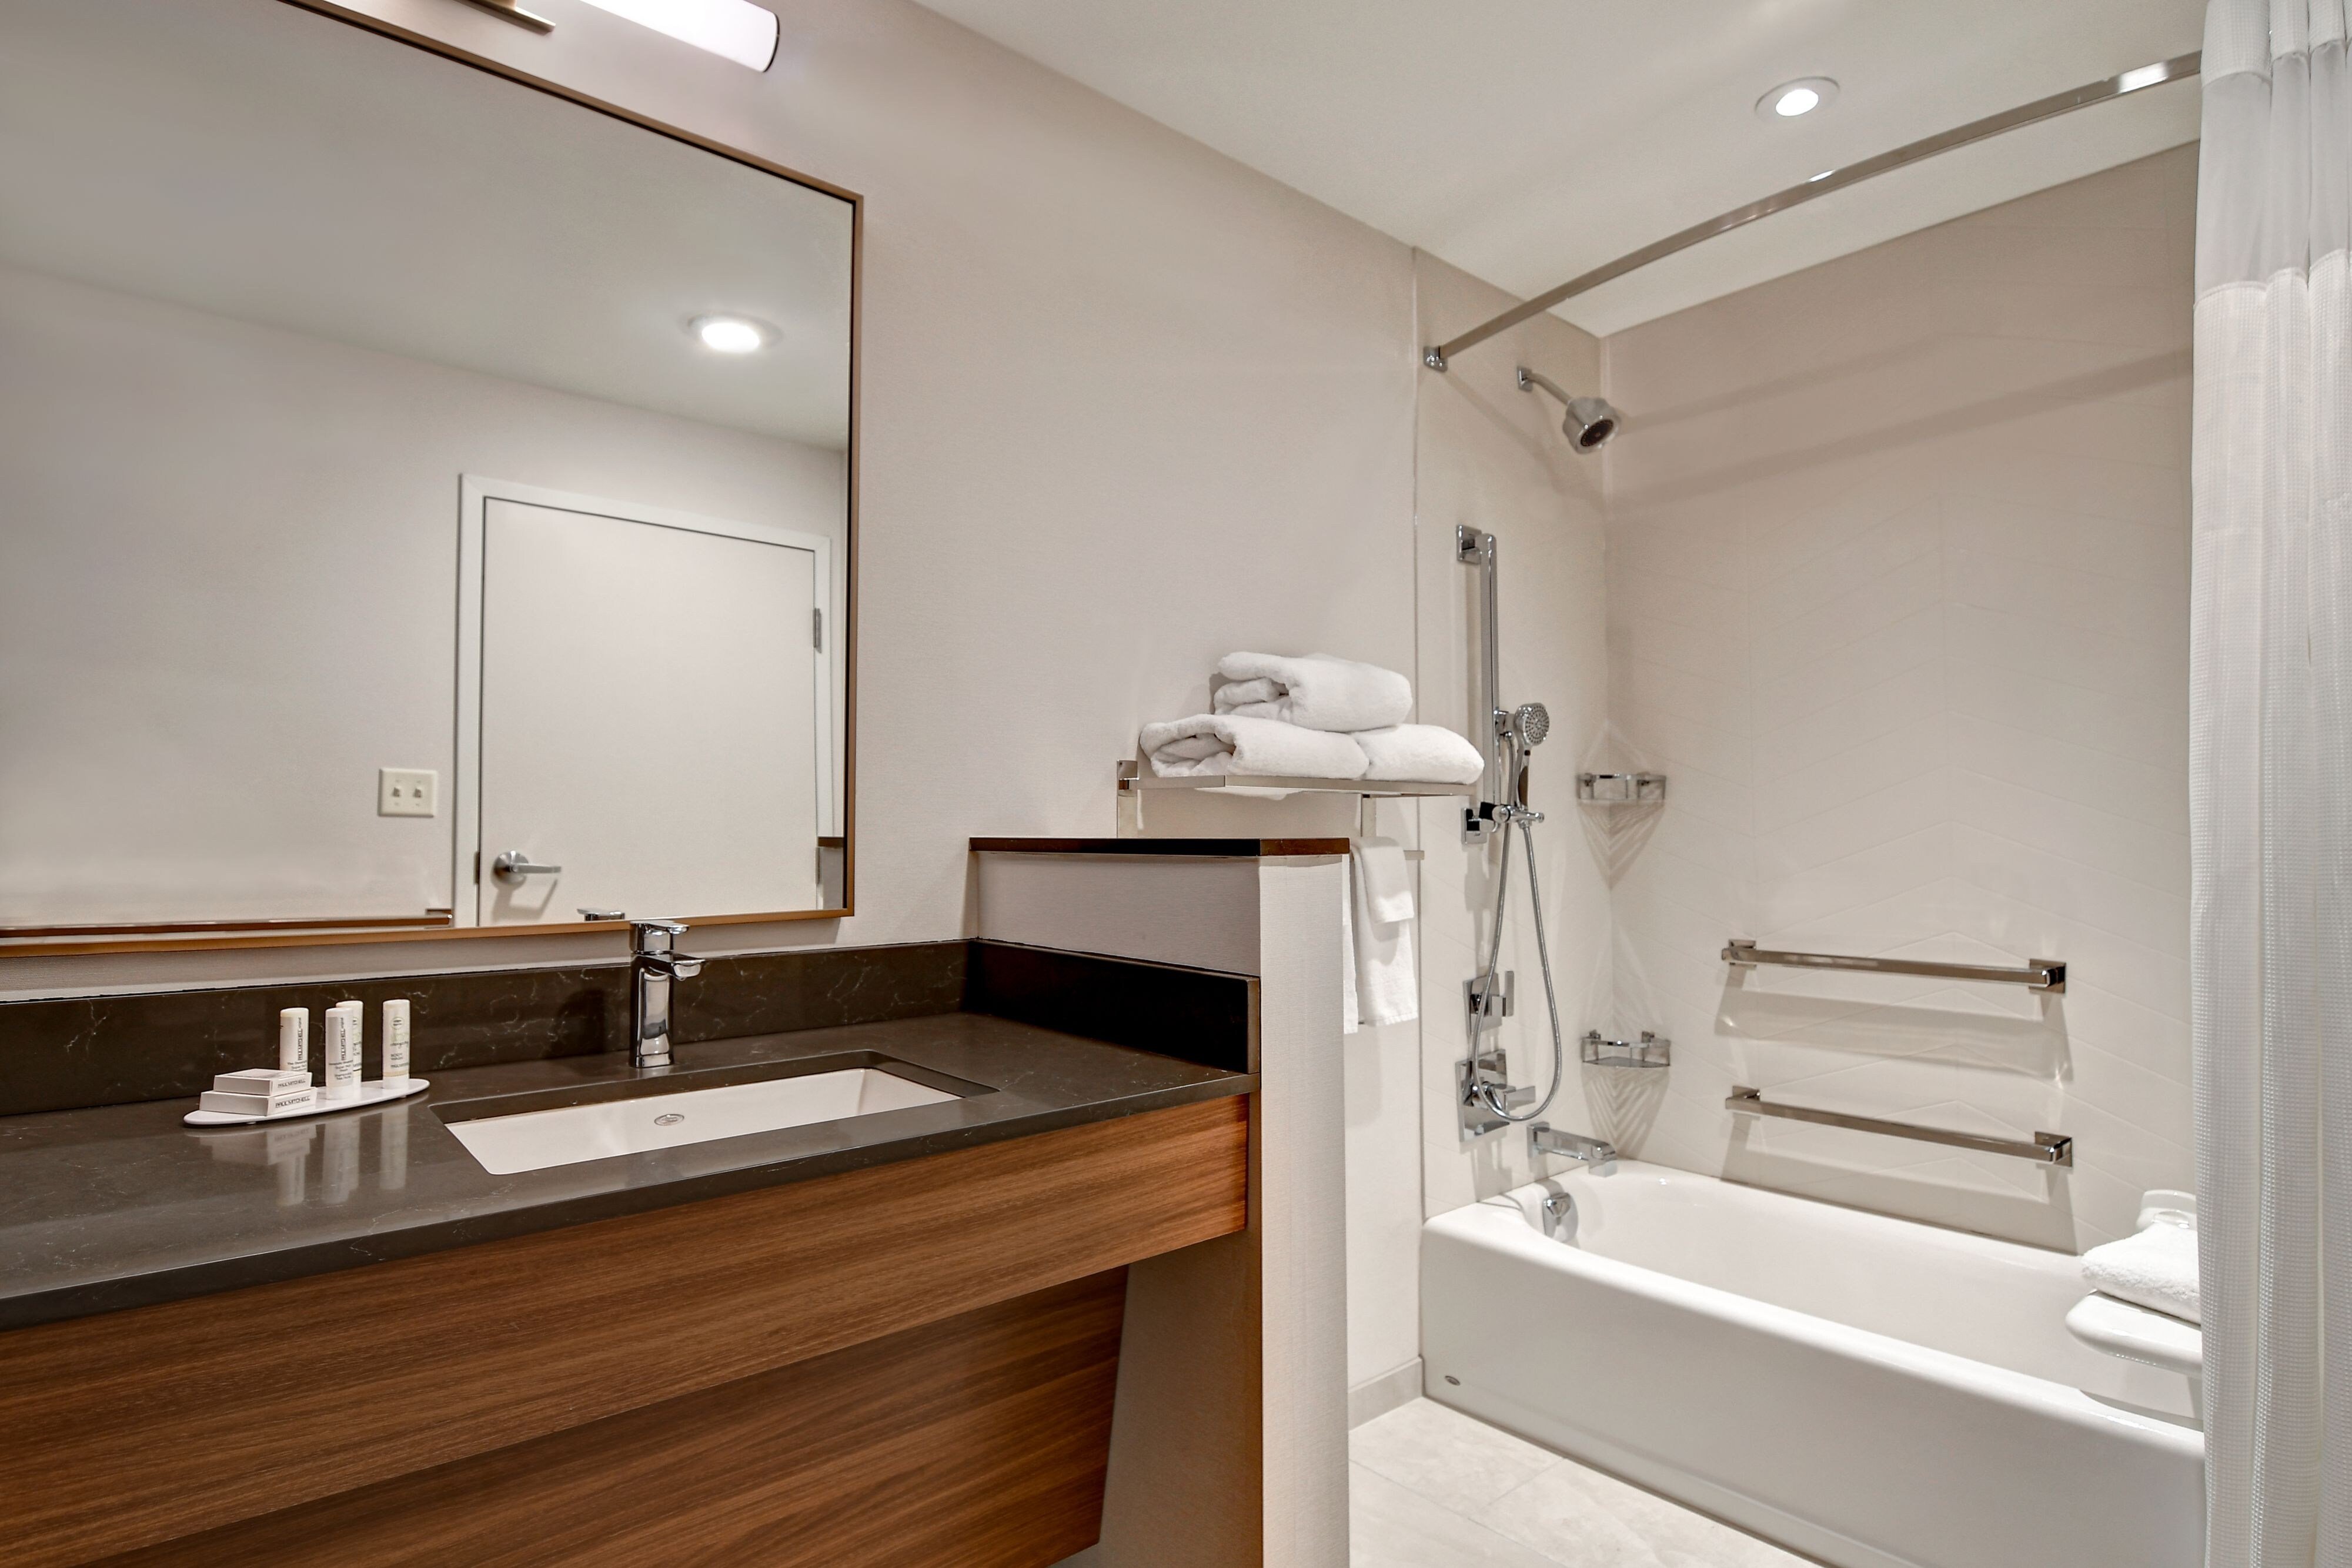 Accessible Bathroom - Tub/Shower Combination